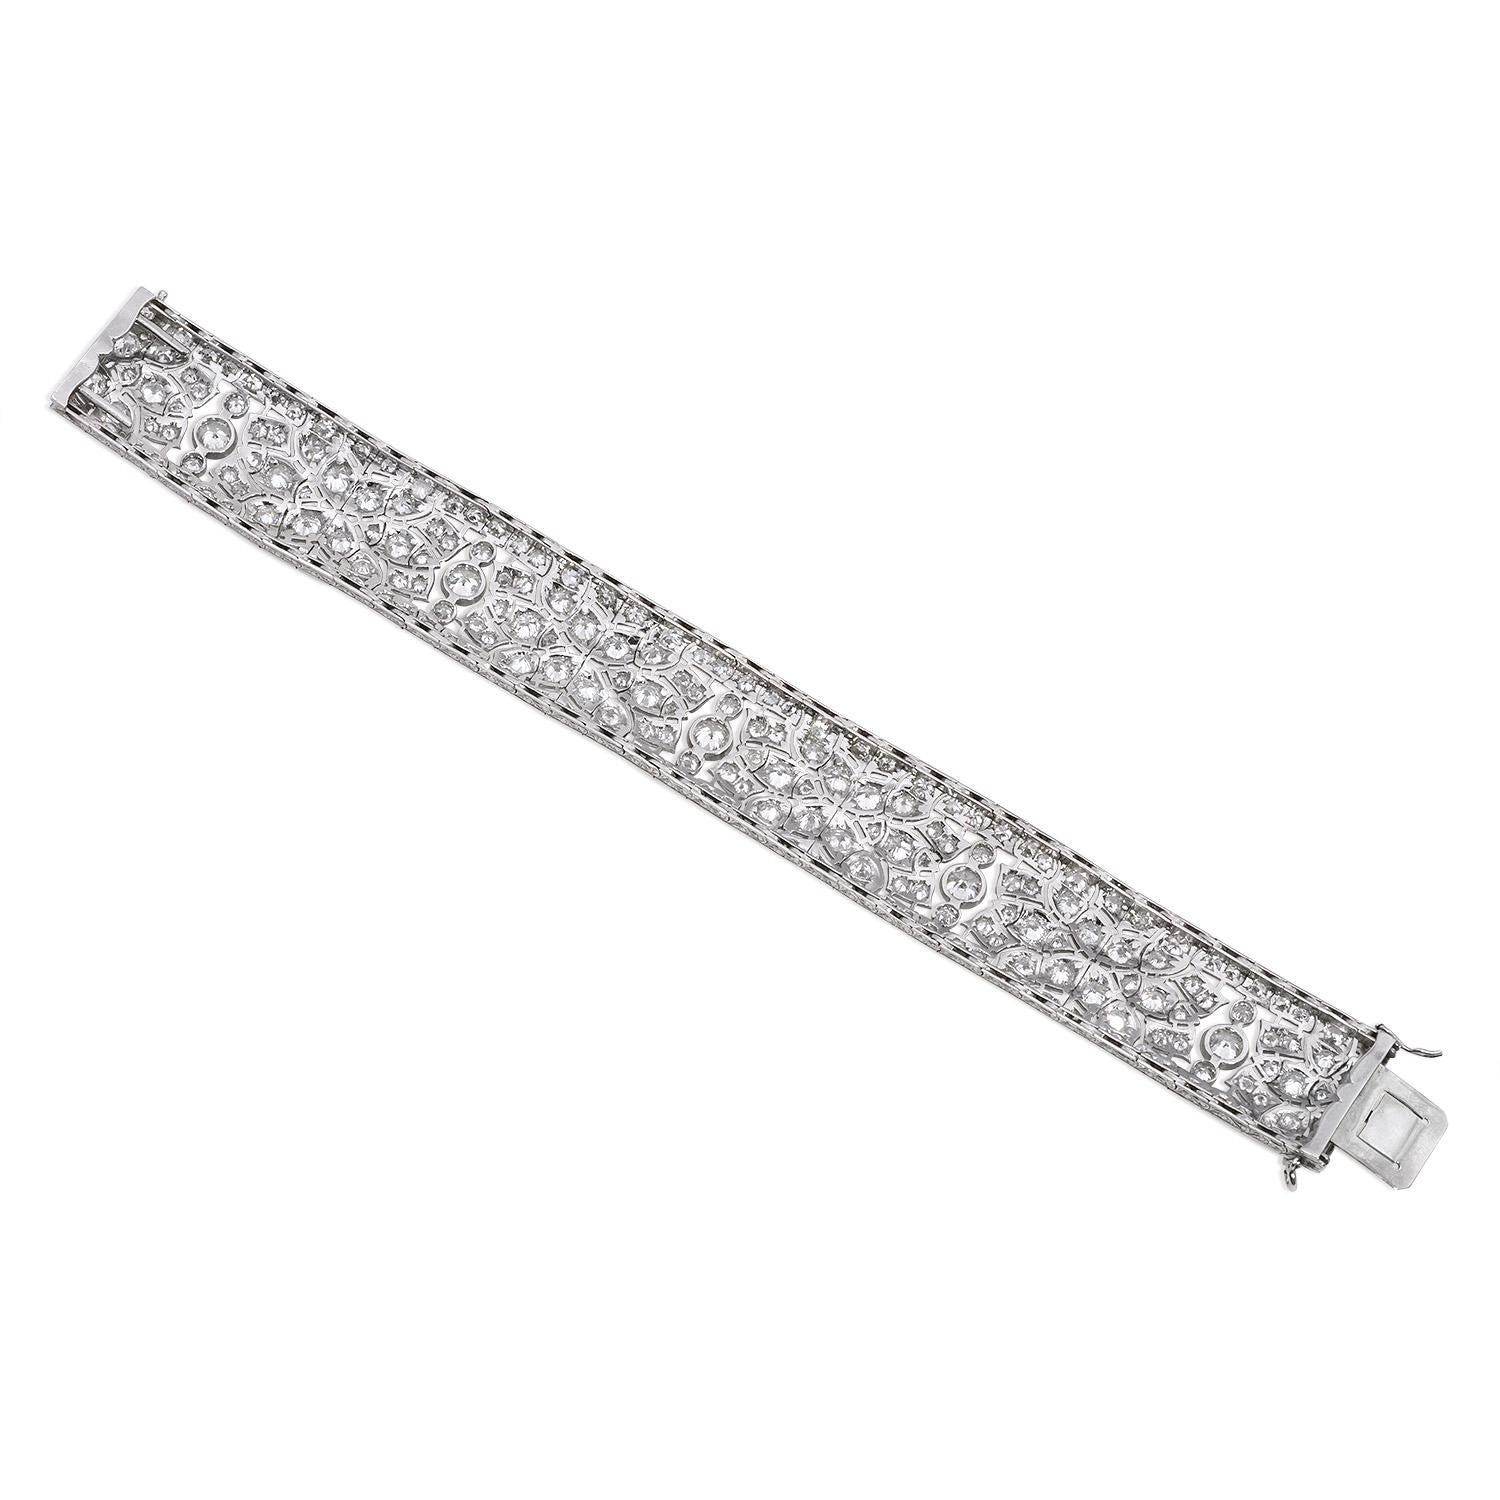 Art Deco Era vintage diamond bracelet featuring 19 carats of Old European cut diamonds, set in a handcrafted platinum bracelet. 